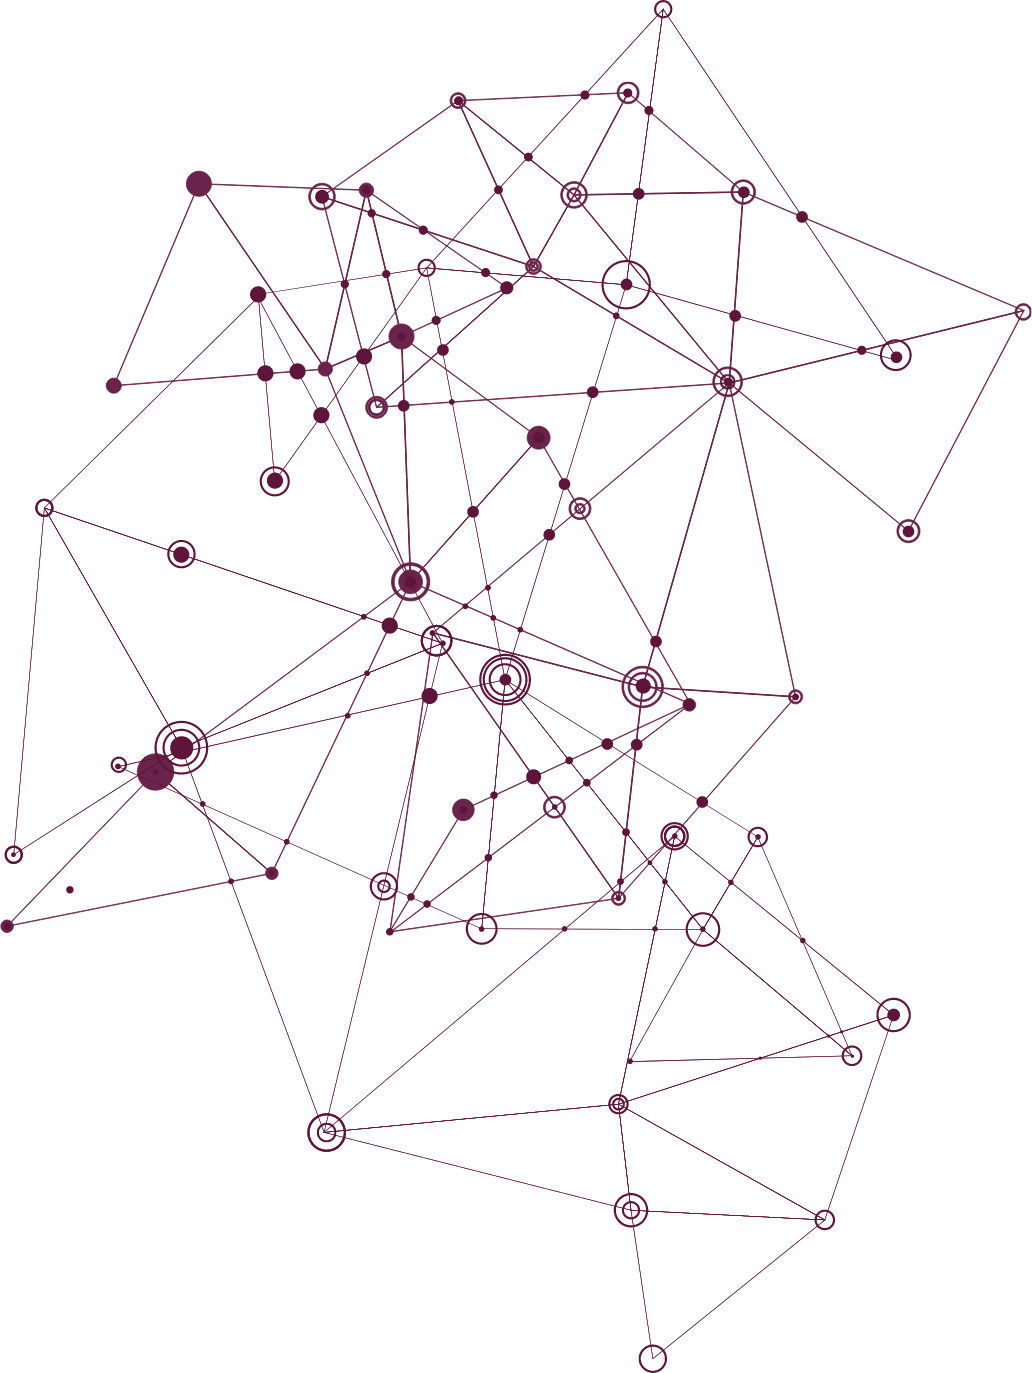 A network illustration